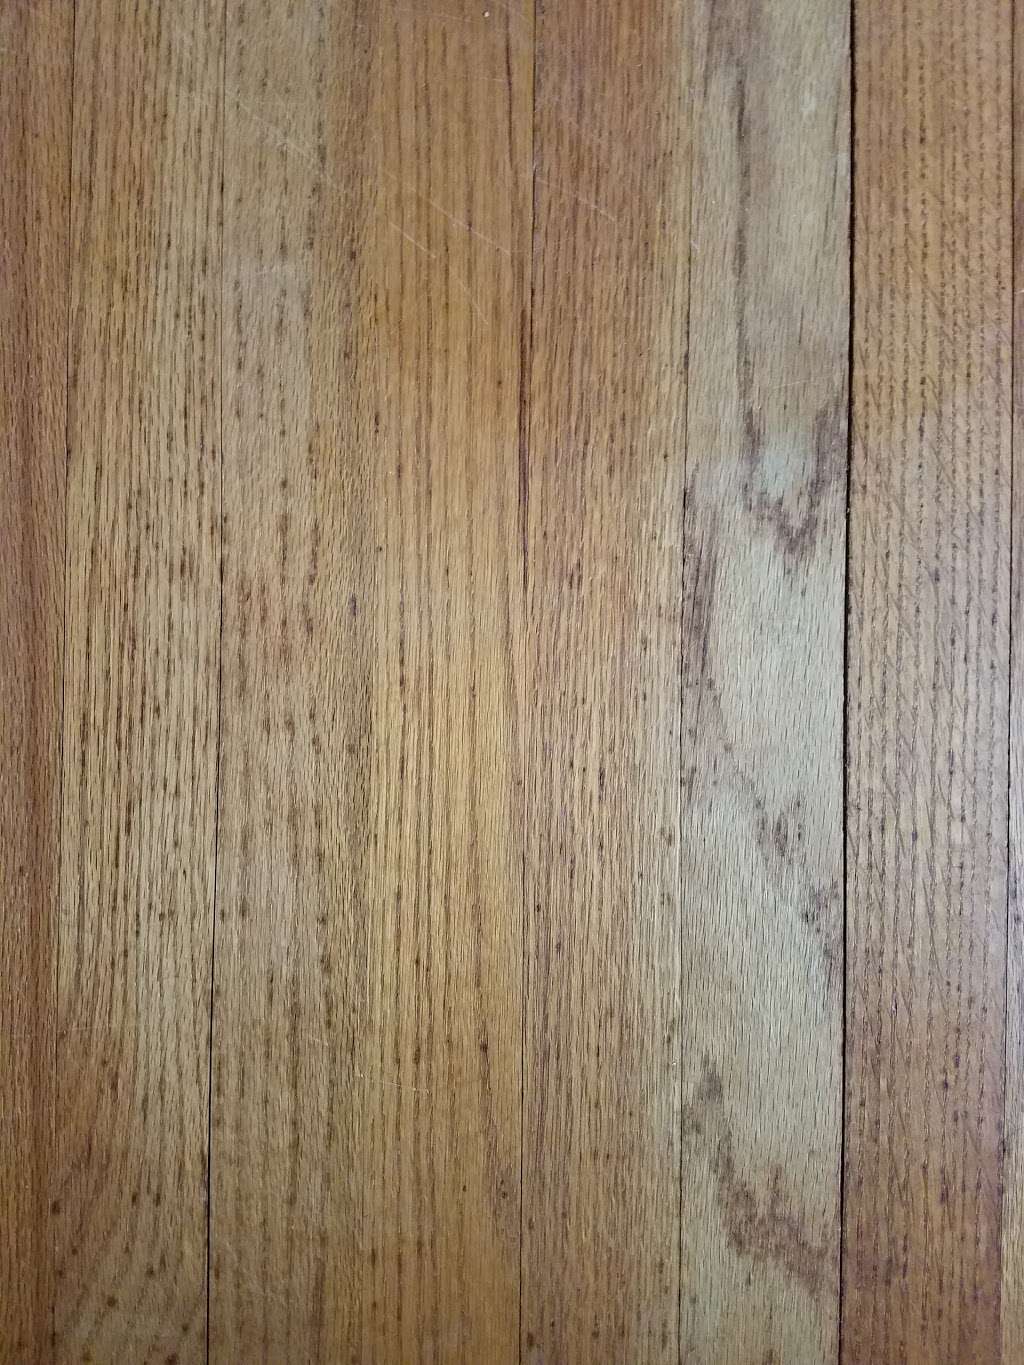 J & J Custom Hardwood Floors | 13513 Zachary Taylor Ct, Manassas, VA 20112 | Phone: (703) 794-9890